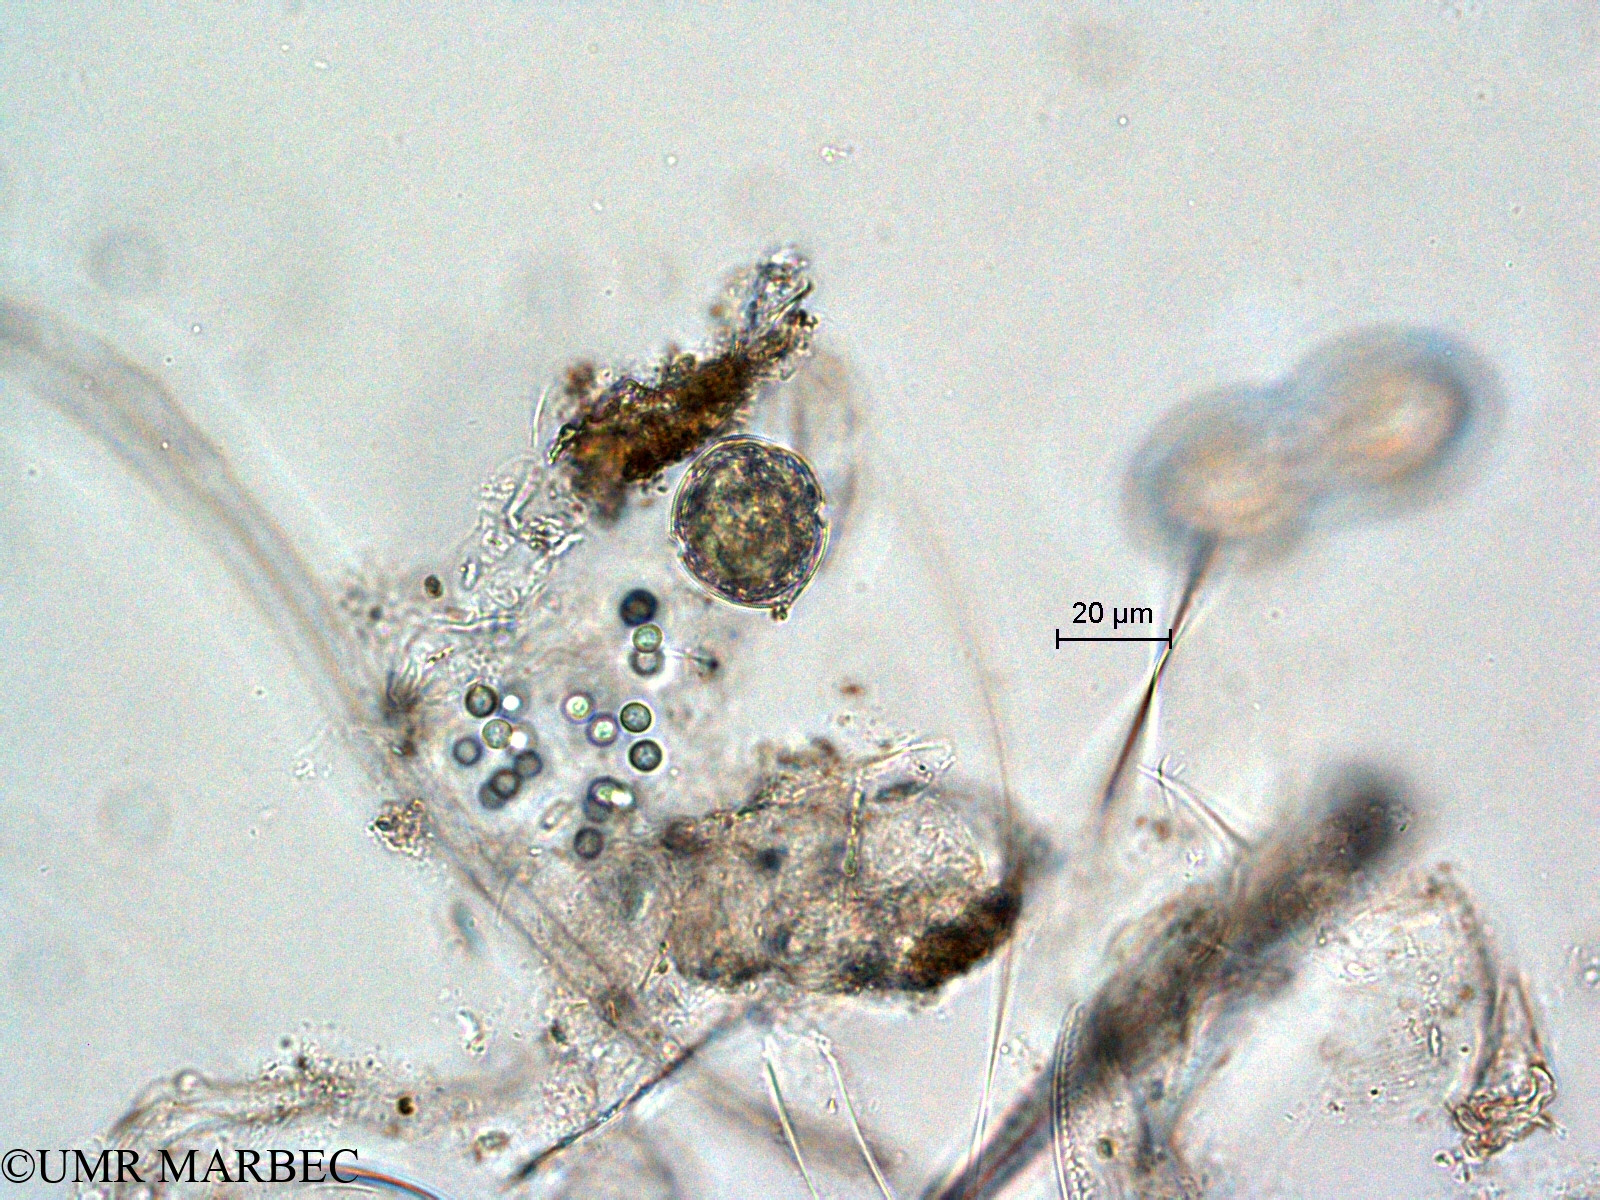 phyto/Scattered_Islands/all/COMMA April 2011/Aphanocapsa sp2 et Scrippsiella spp (1)(copy).jpg